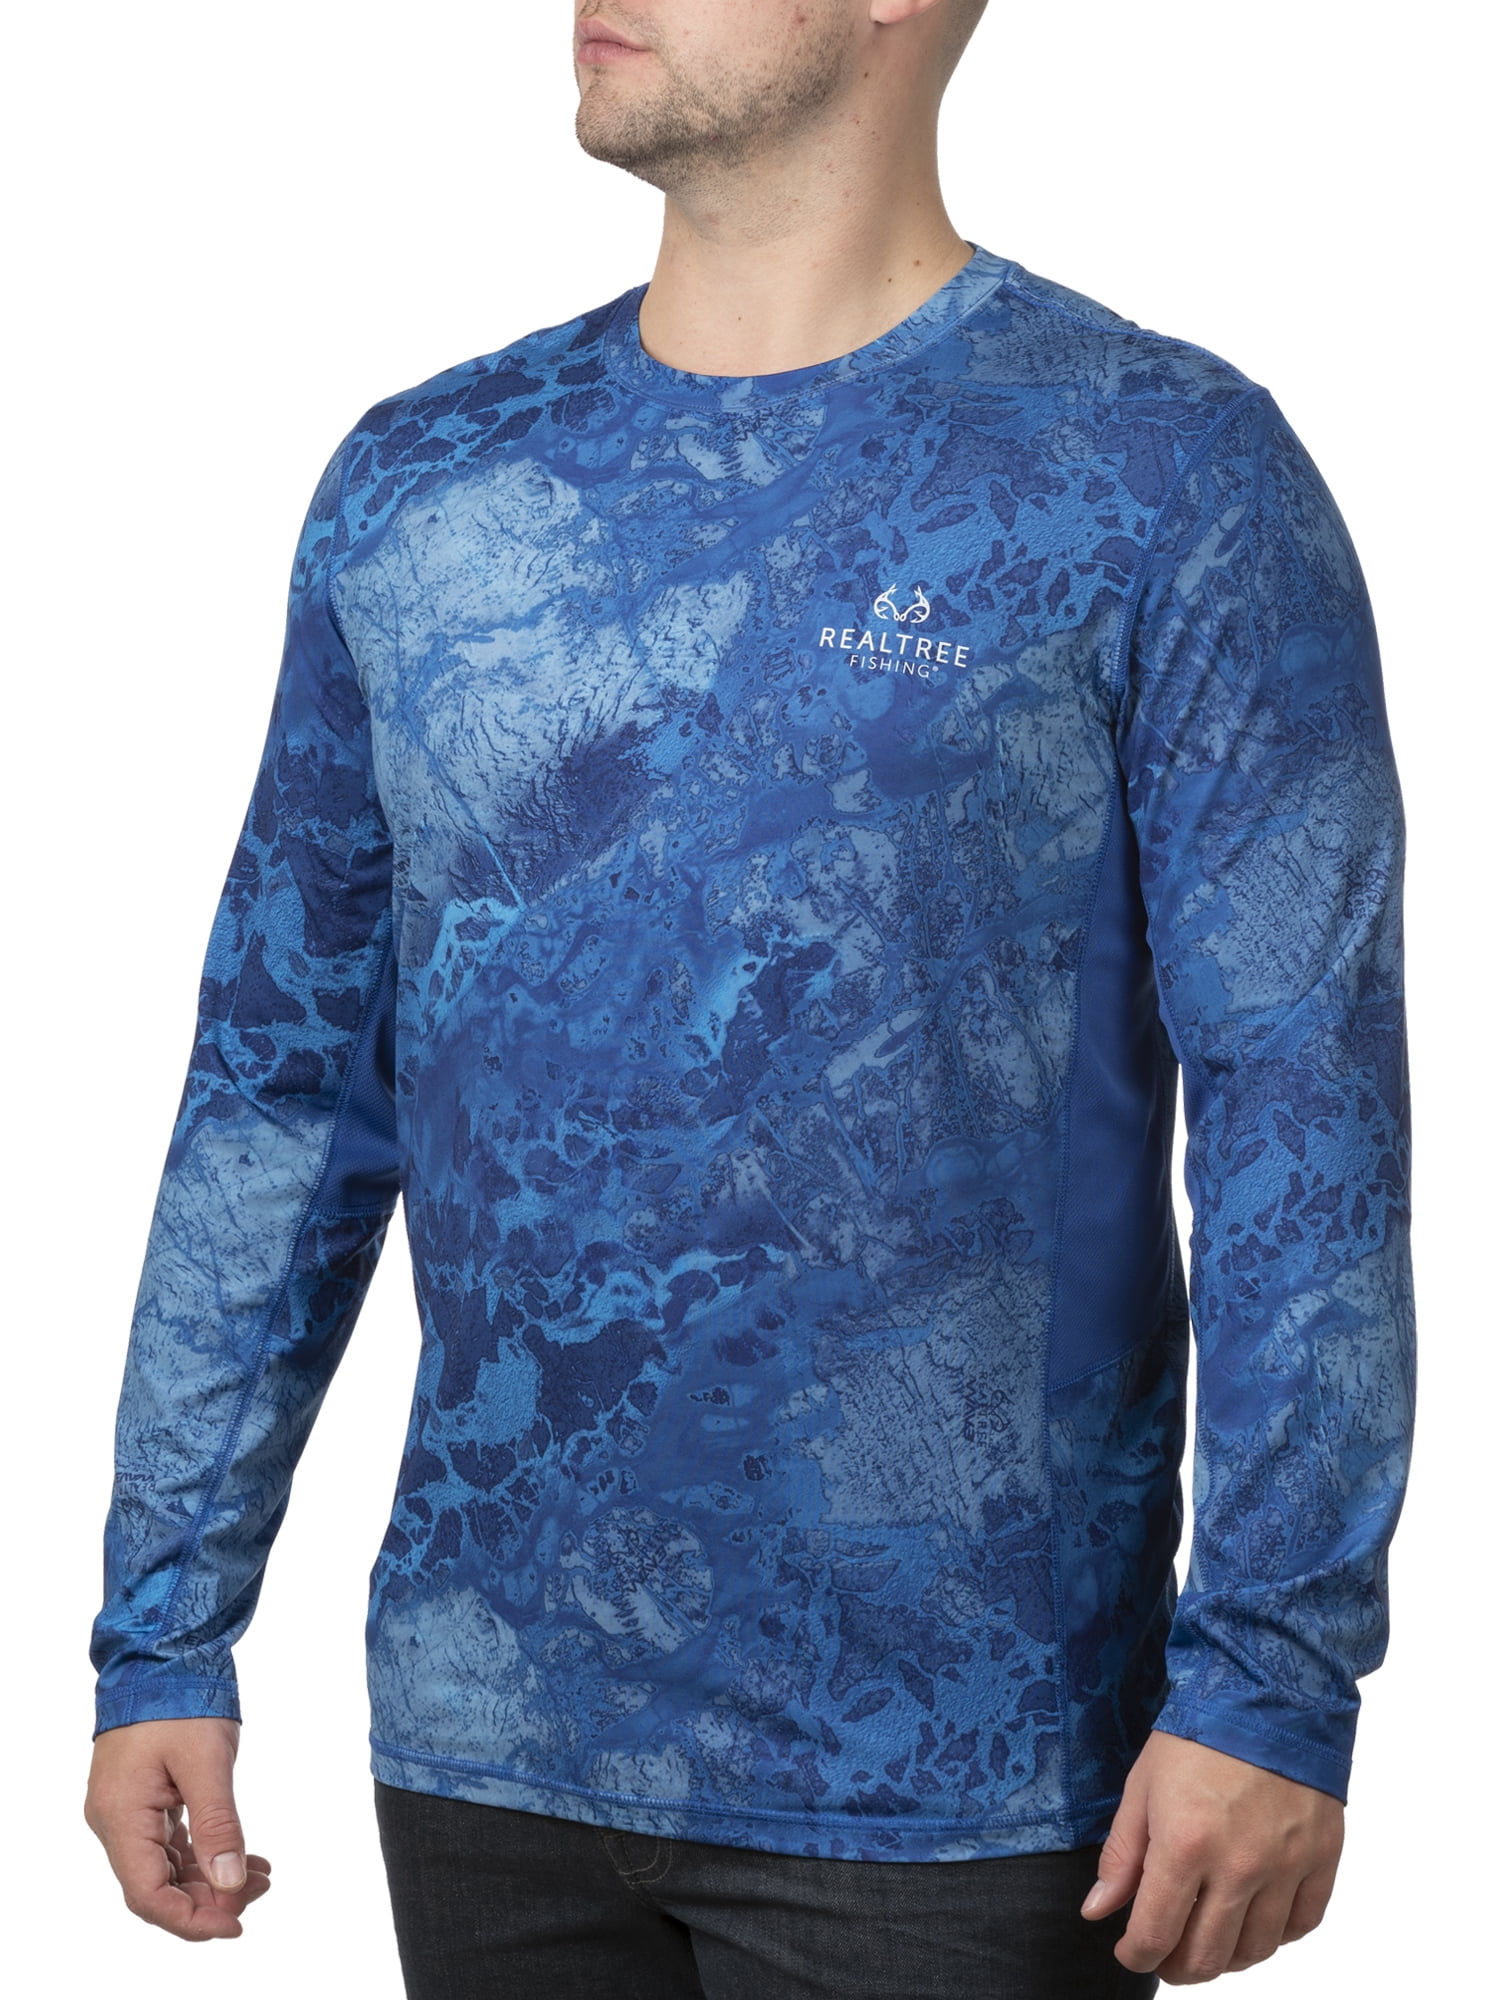 Realtree Mens Fishing M Light Blue Long Sleeve Shirt Cool Moisture Wicking 